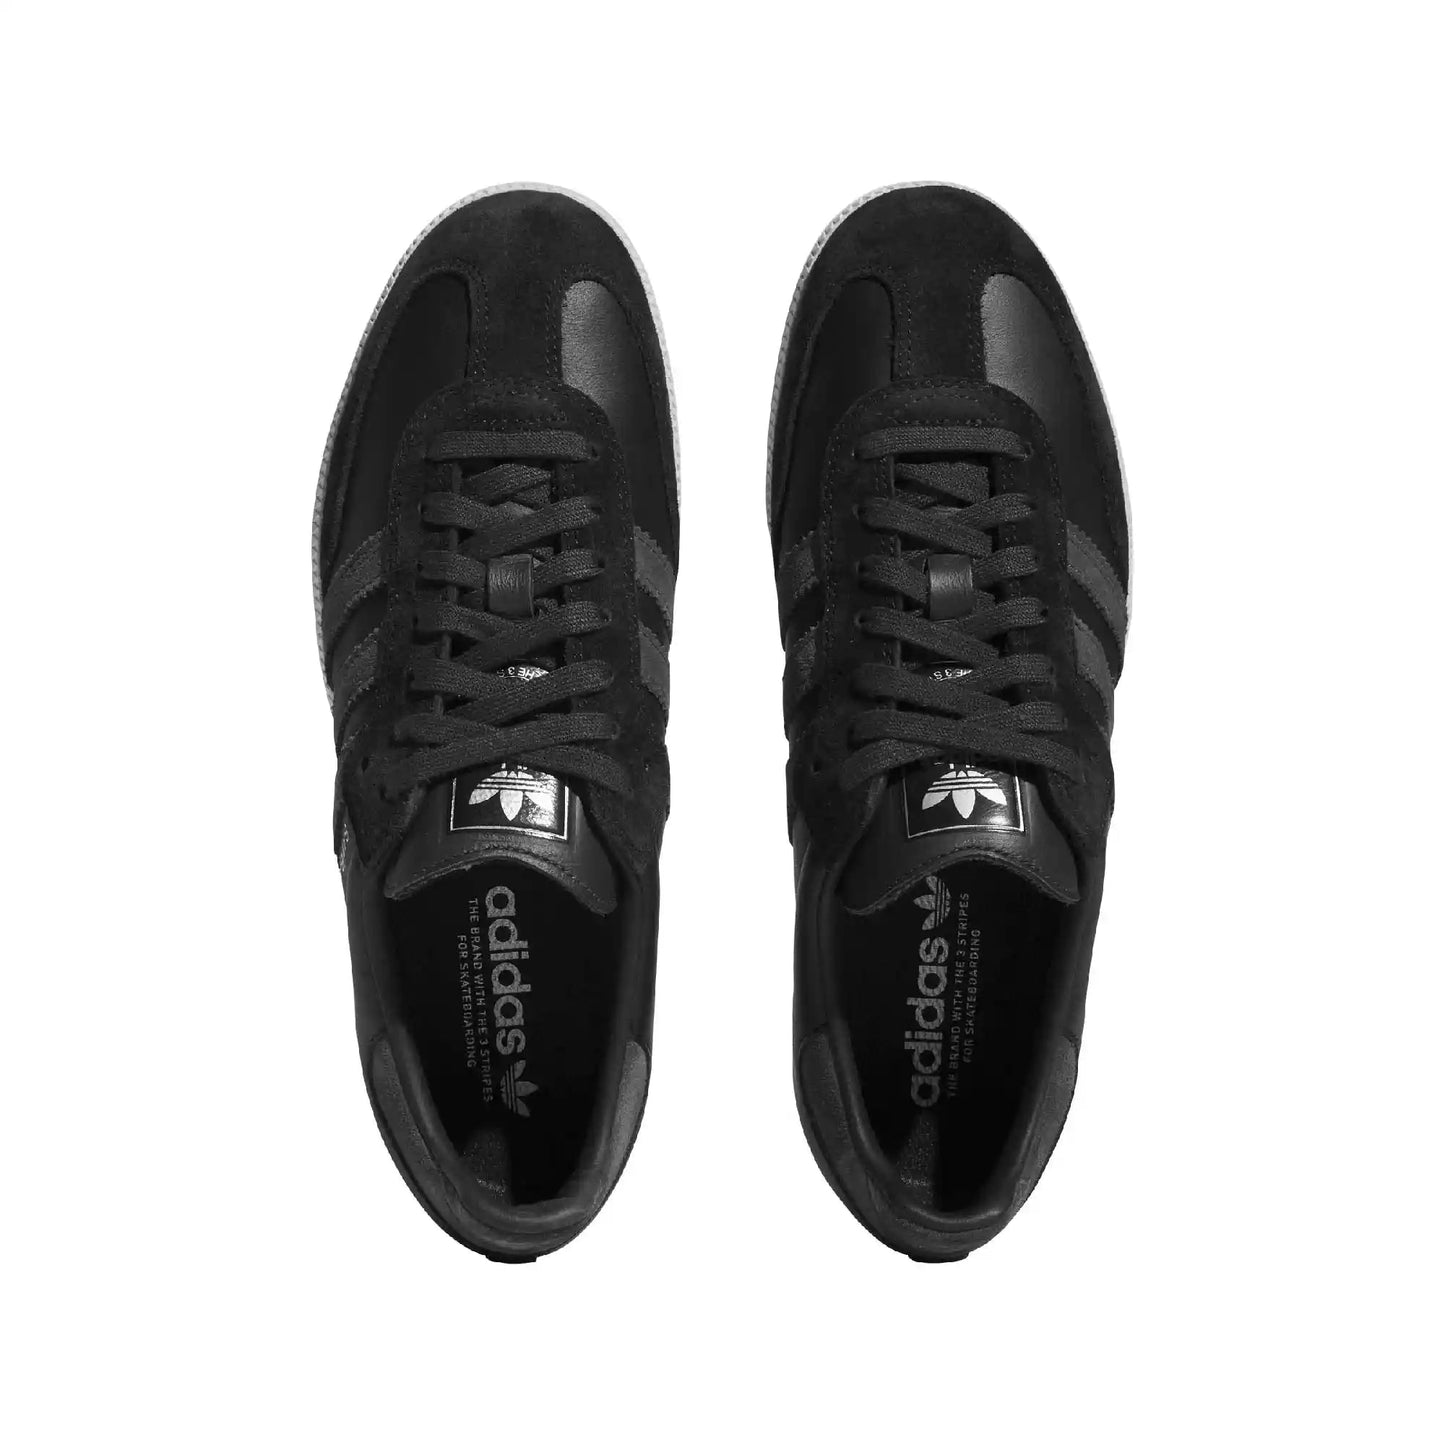 Adidas Samba Adv, core black/carbon/silver metallic - Tiki Room Skateboards - 3